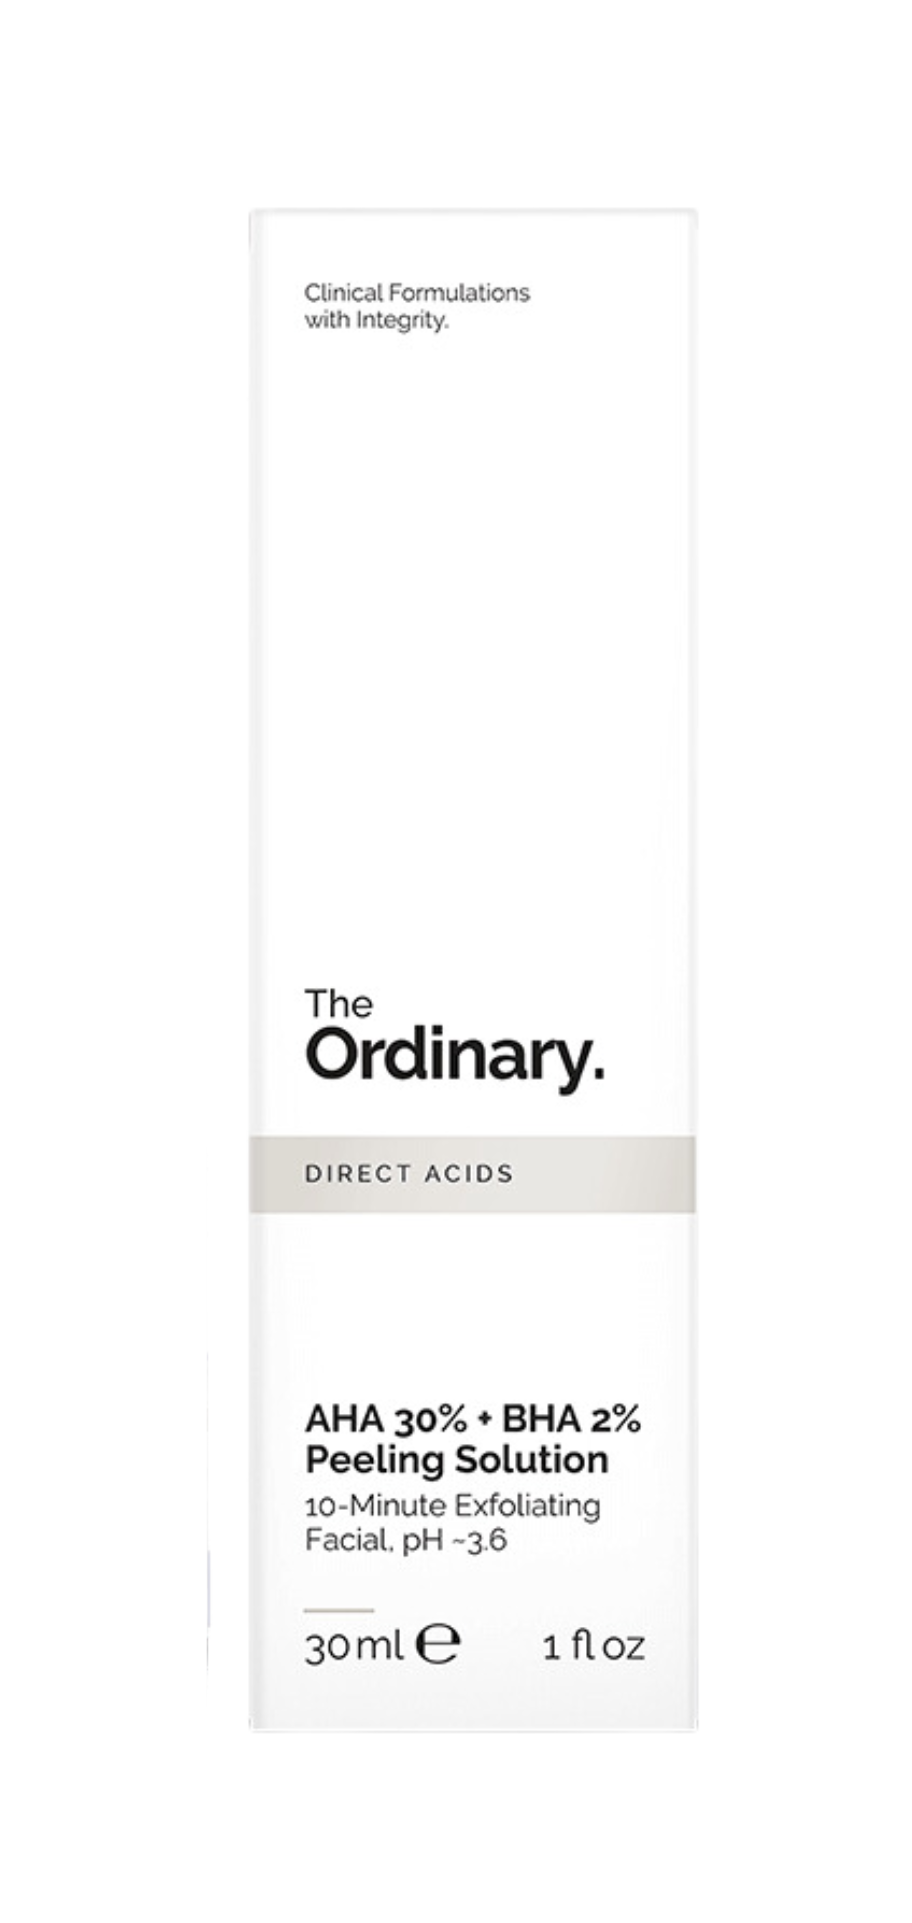 The Ordinary Lactic Acid 5% + HA Volume -30ml